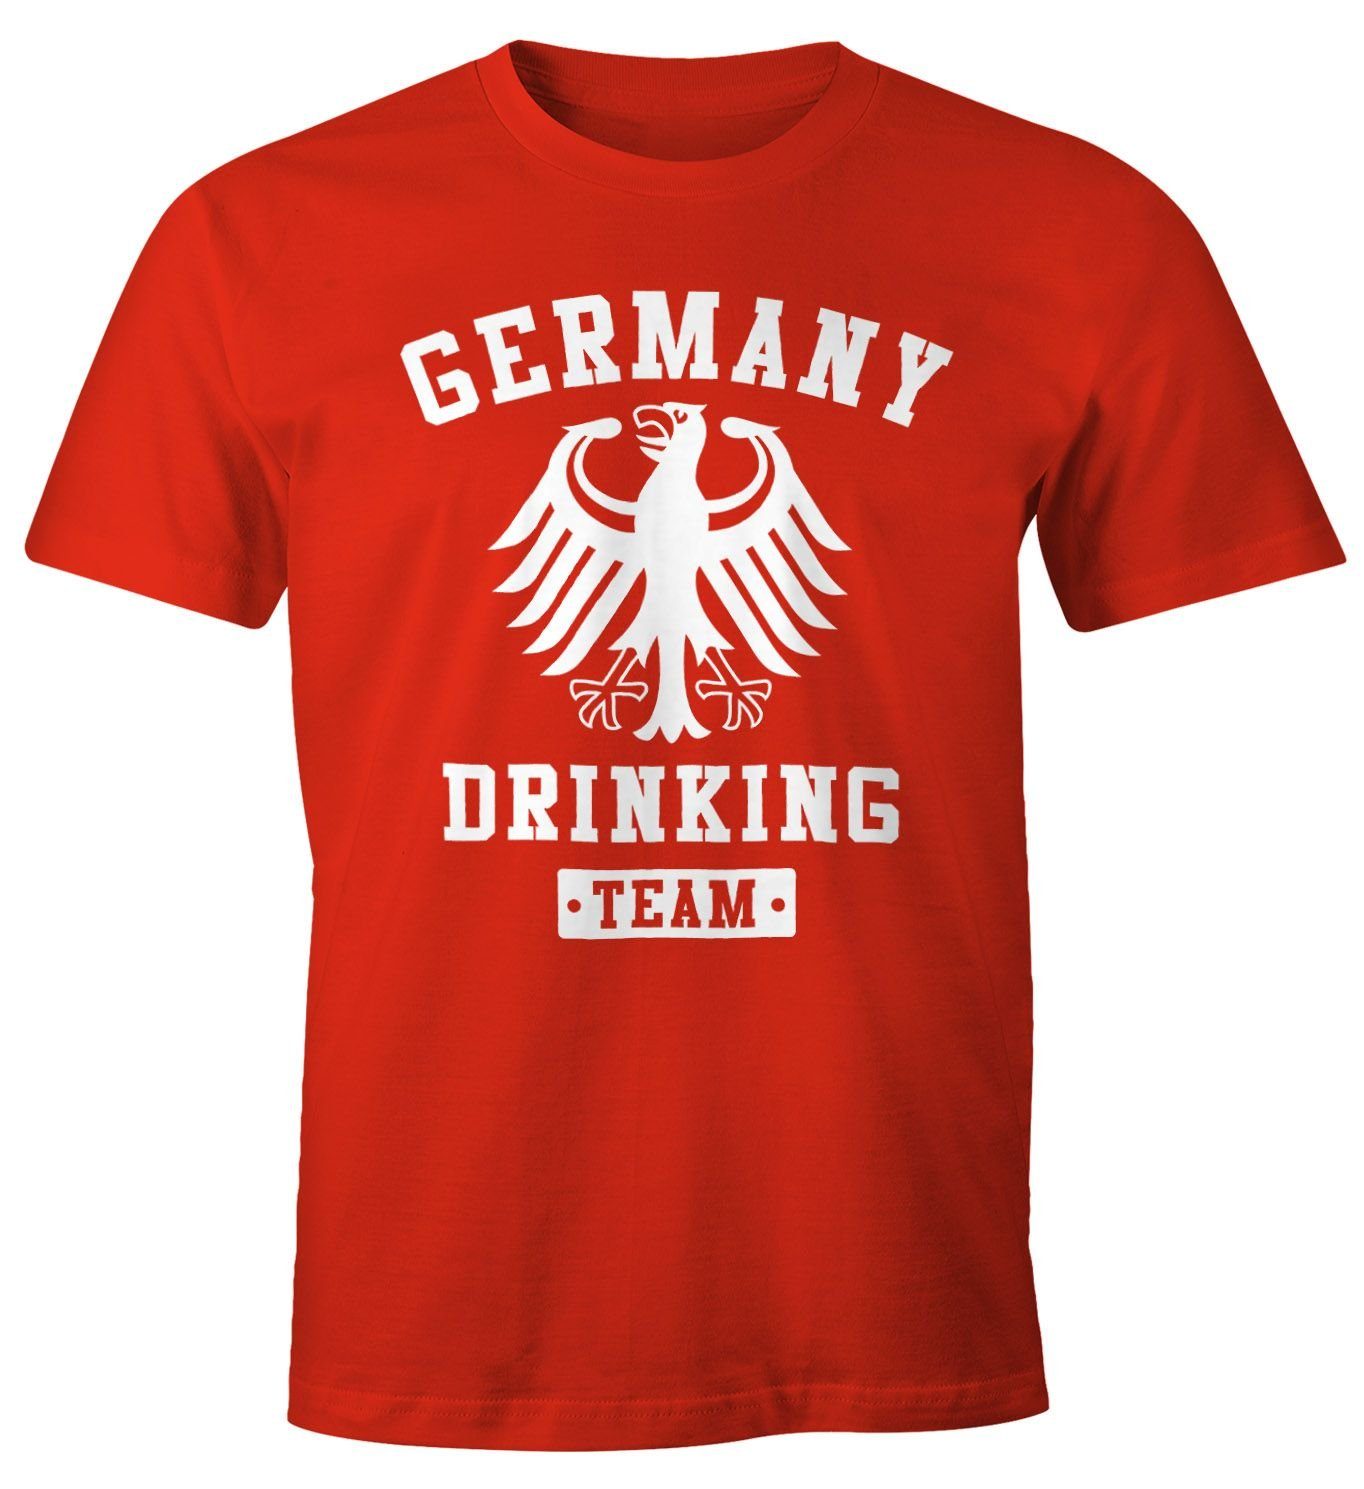 MoonWorks Print-Shirt Deutschland Herren T-Shirt Germany Drinking Team Bier Adler Fun-Shirt Moonworks® mit Print rot